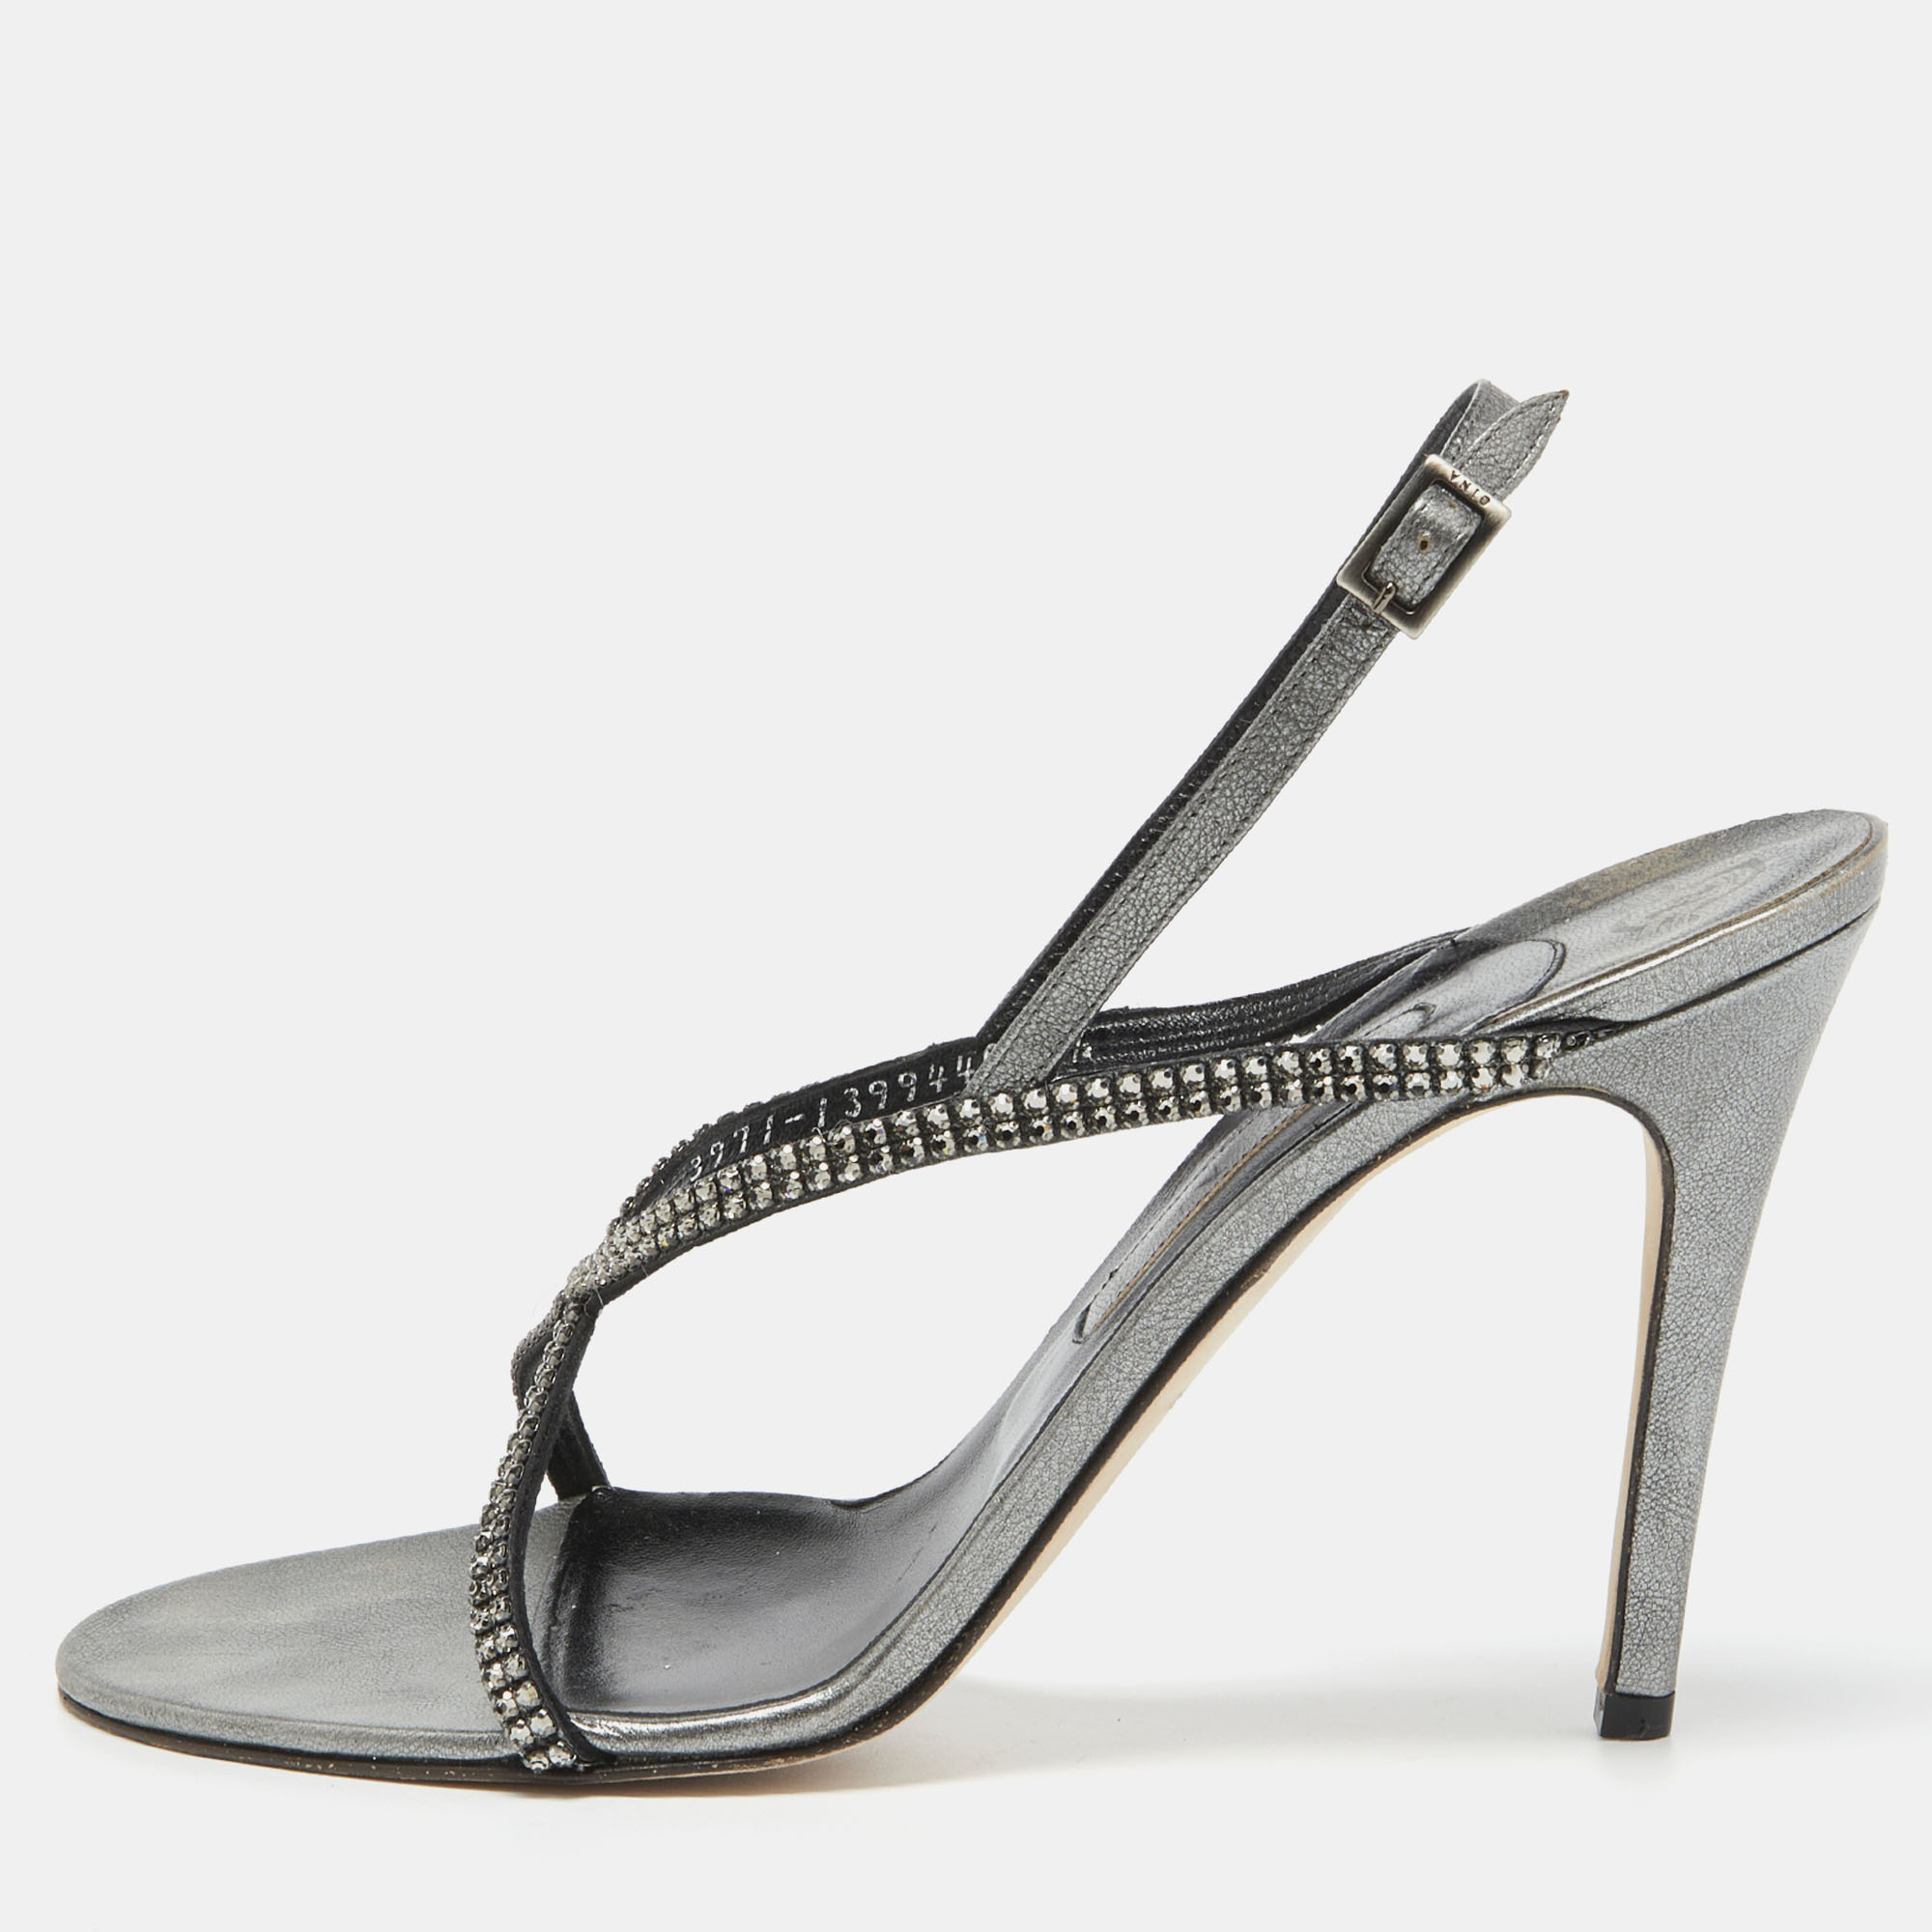 Pre-owned Gina Metallic Grey Leather Crystal Embellished Slingback Sandals Size 39.5